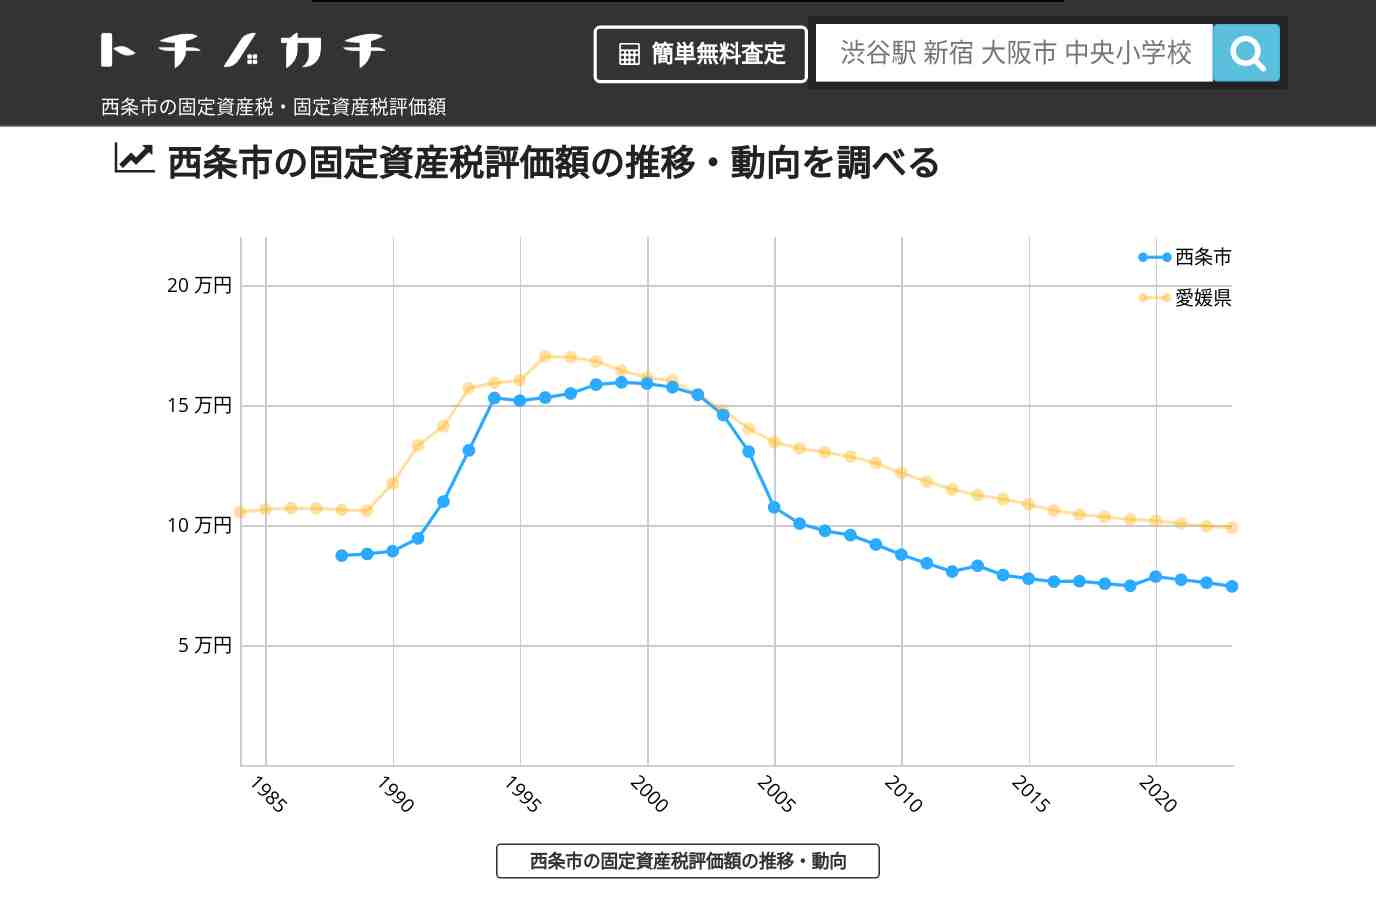 周布小学校(愛媛県 西条市)周辺の固定資産税・固定資産税評価額 | トチノカチ